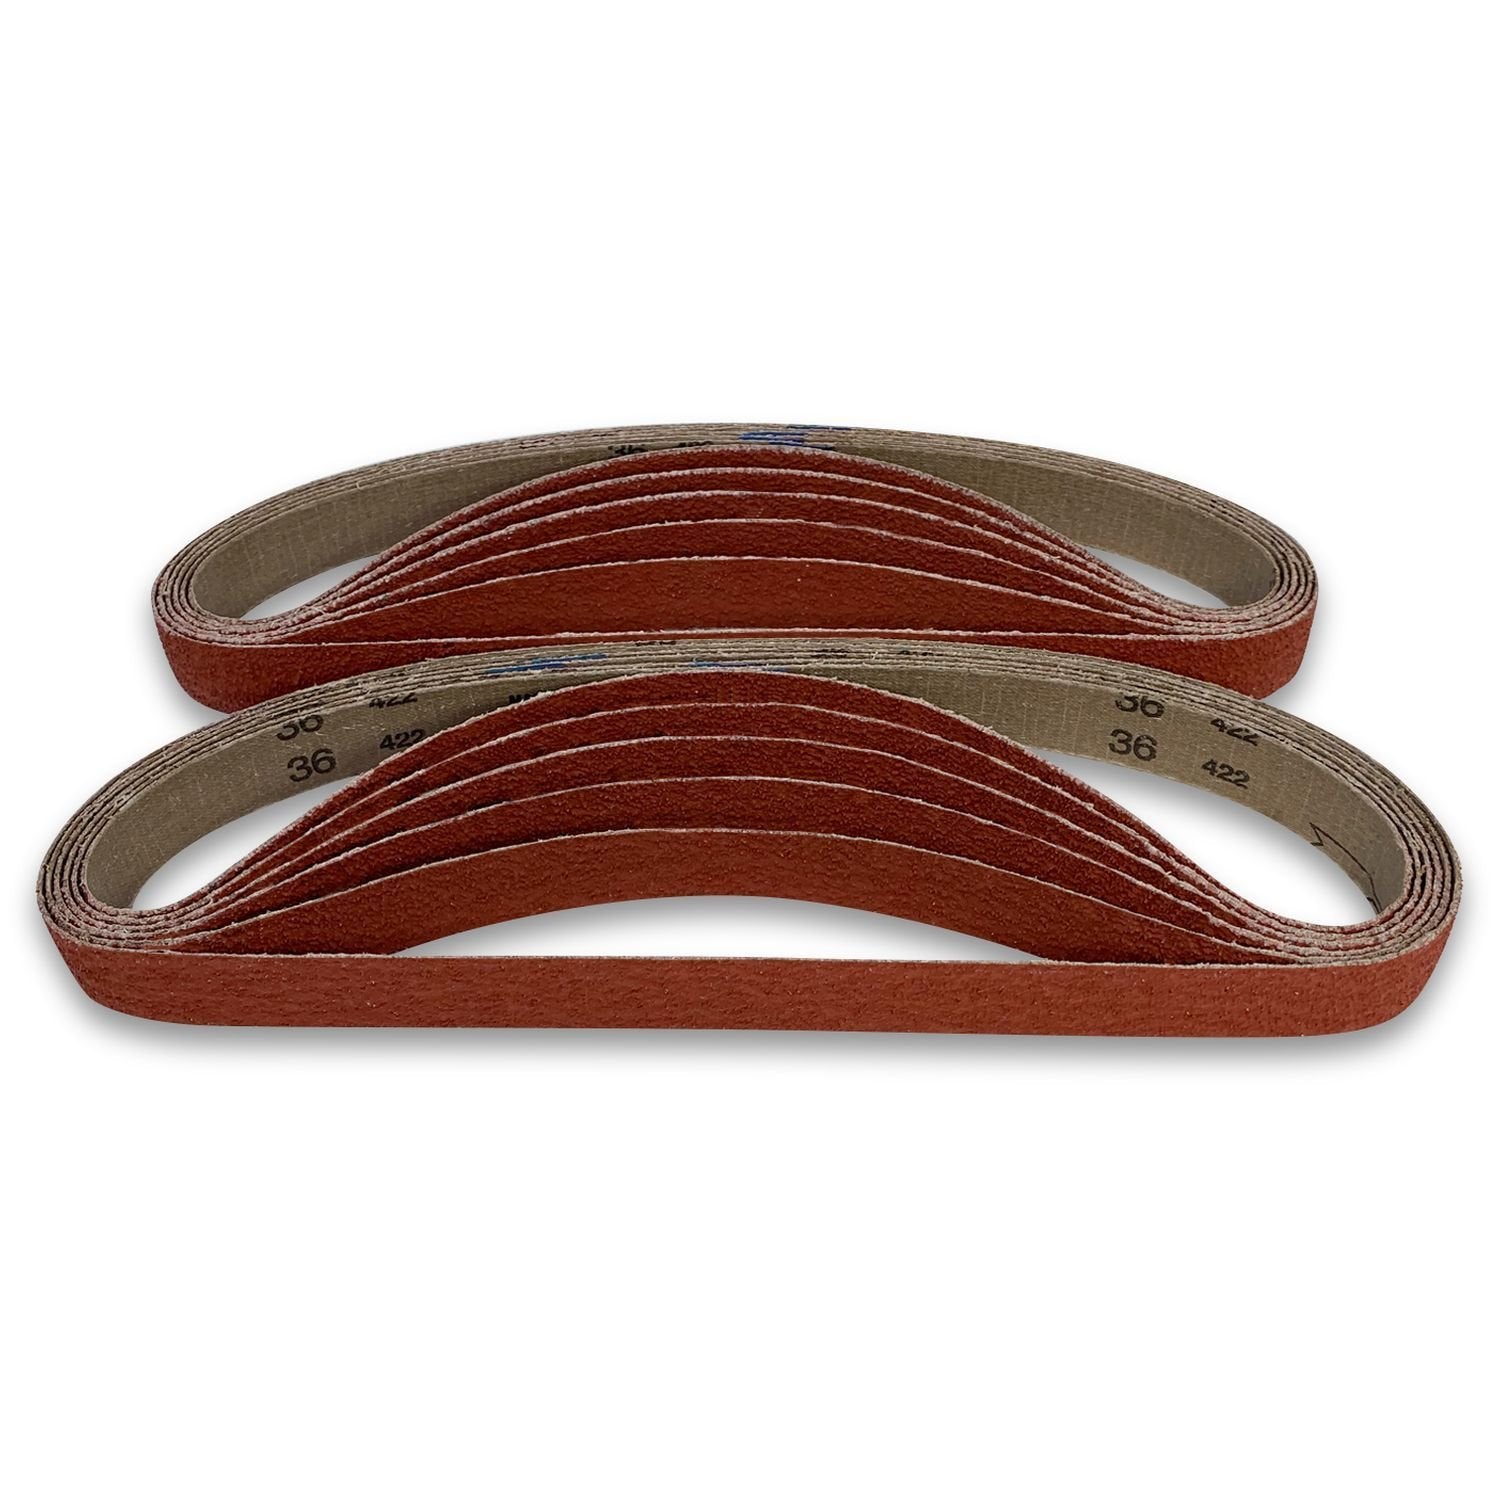 1 x 44 Inch EdgeCore Premium Ceramic Grinding Belts, 12 Pack - Red Label Abrasives